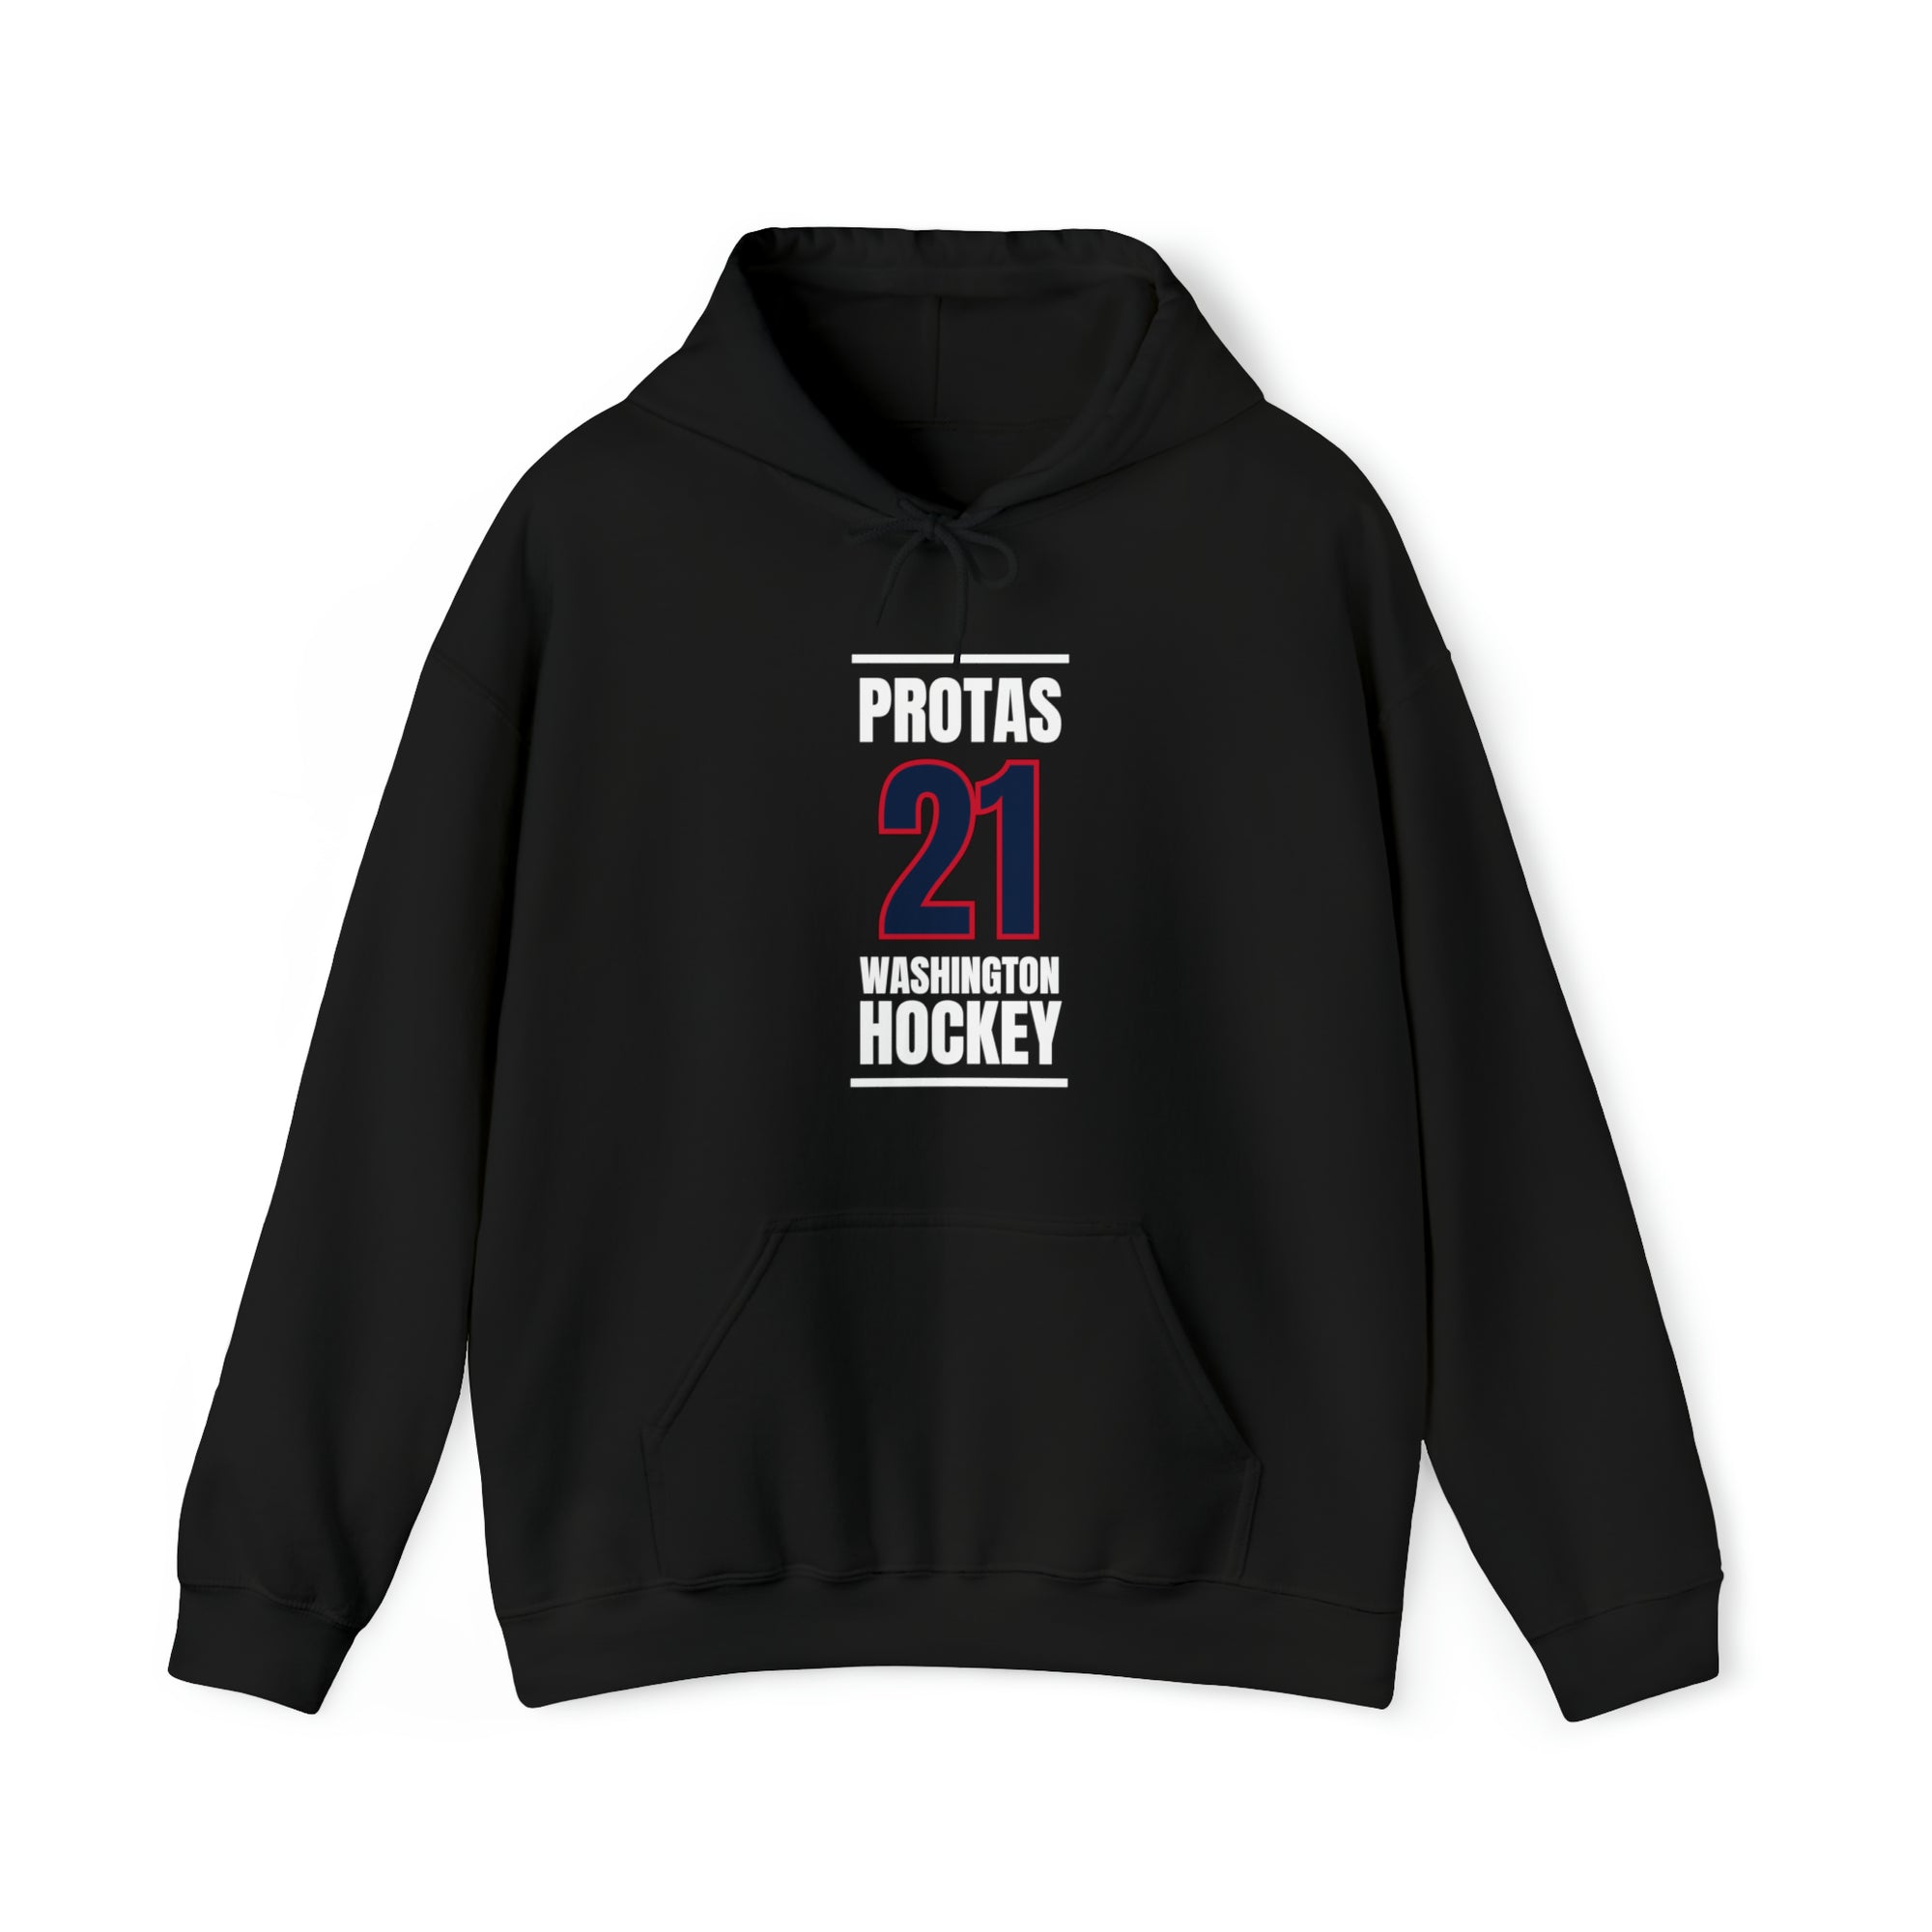 Protas 21 Washington Hockey Navy Vertical Design Unisex Hooded Sweatshirt